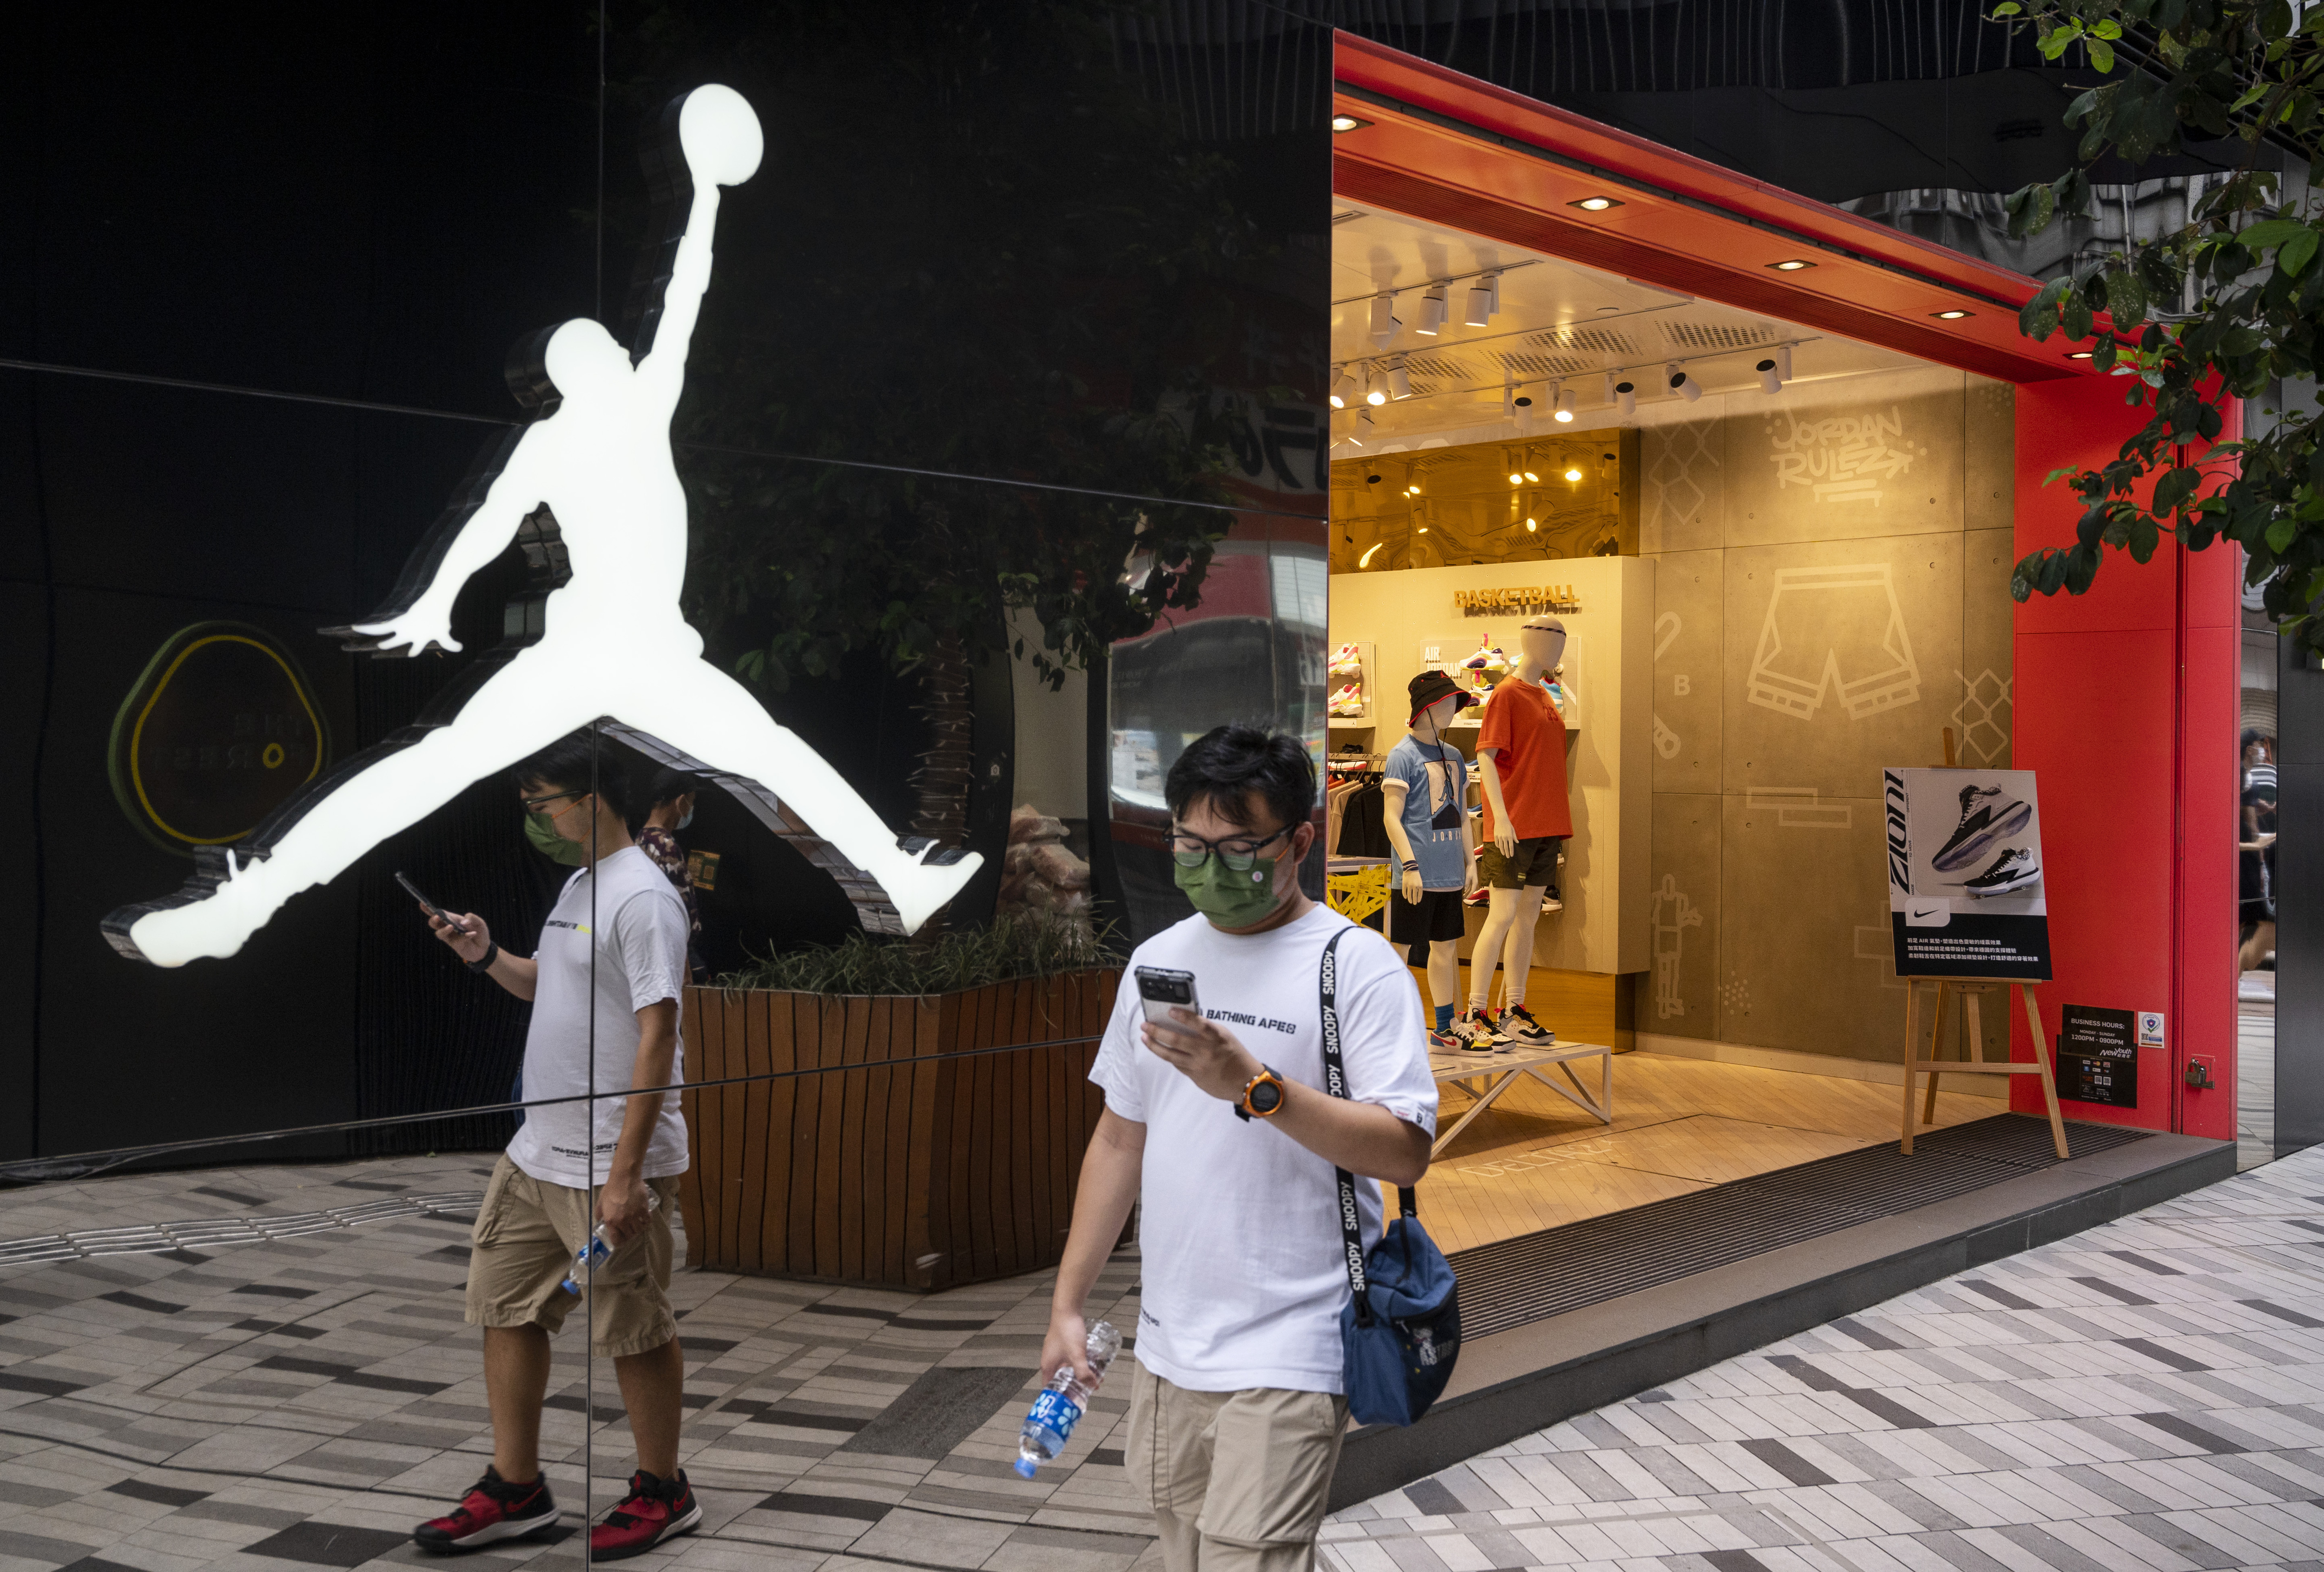 The Nike SB x Air Jordan 4 'Pine Green' is a basketball legend